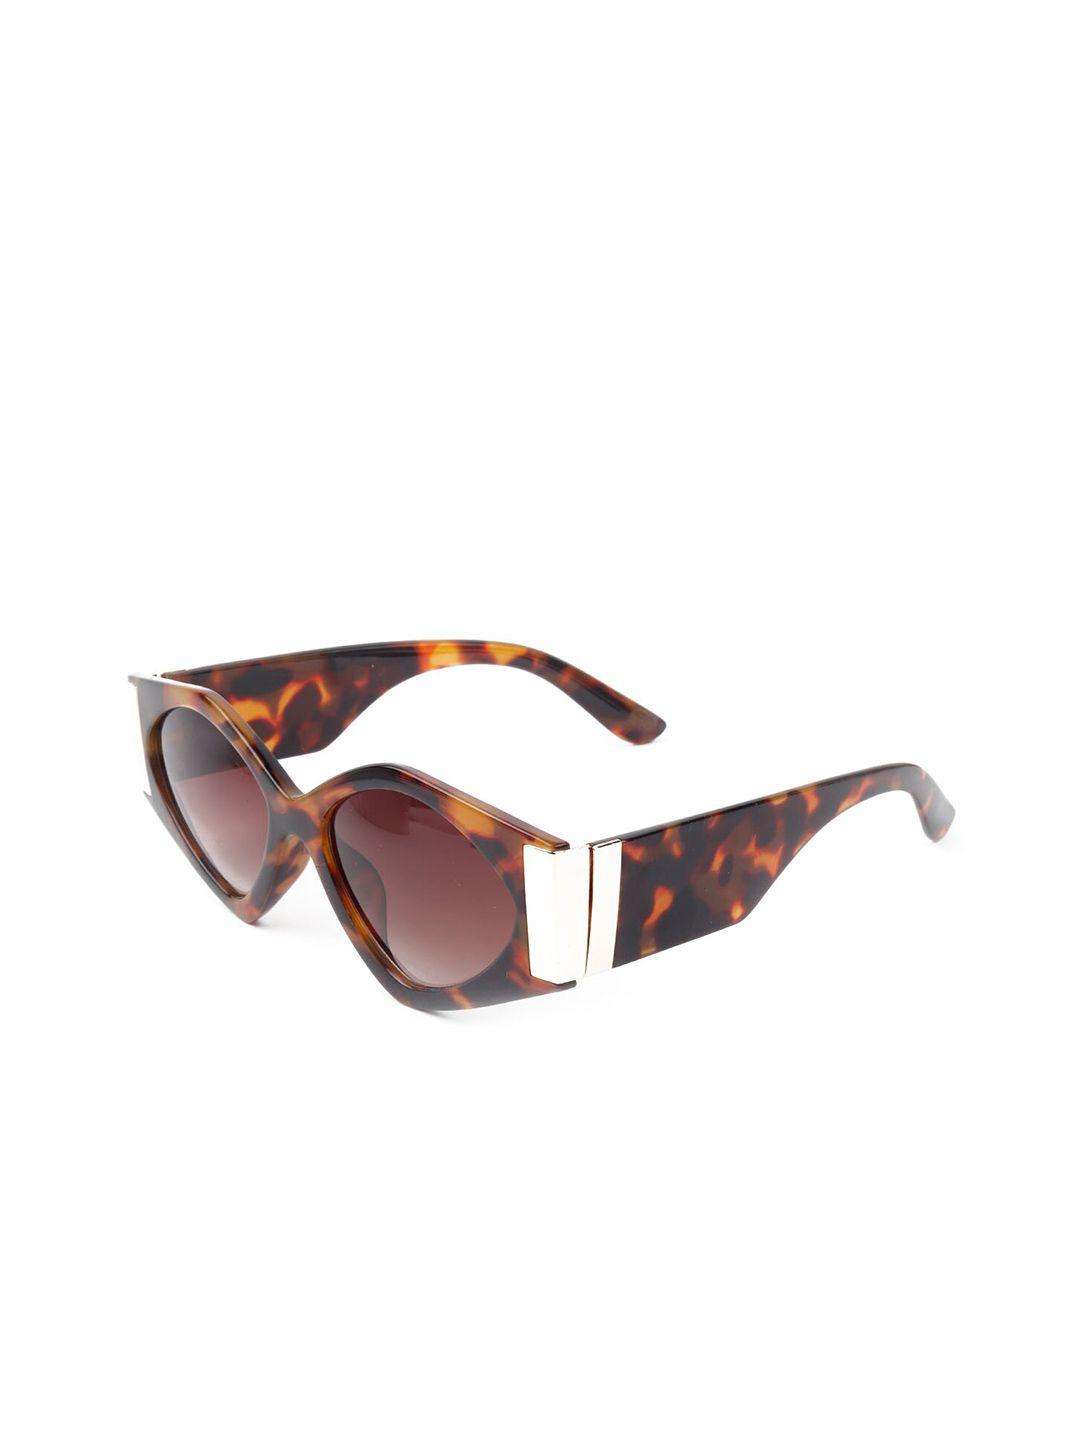 odette-women-oversized-sunglasses-with-uv-protected-lens-atm72-